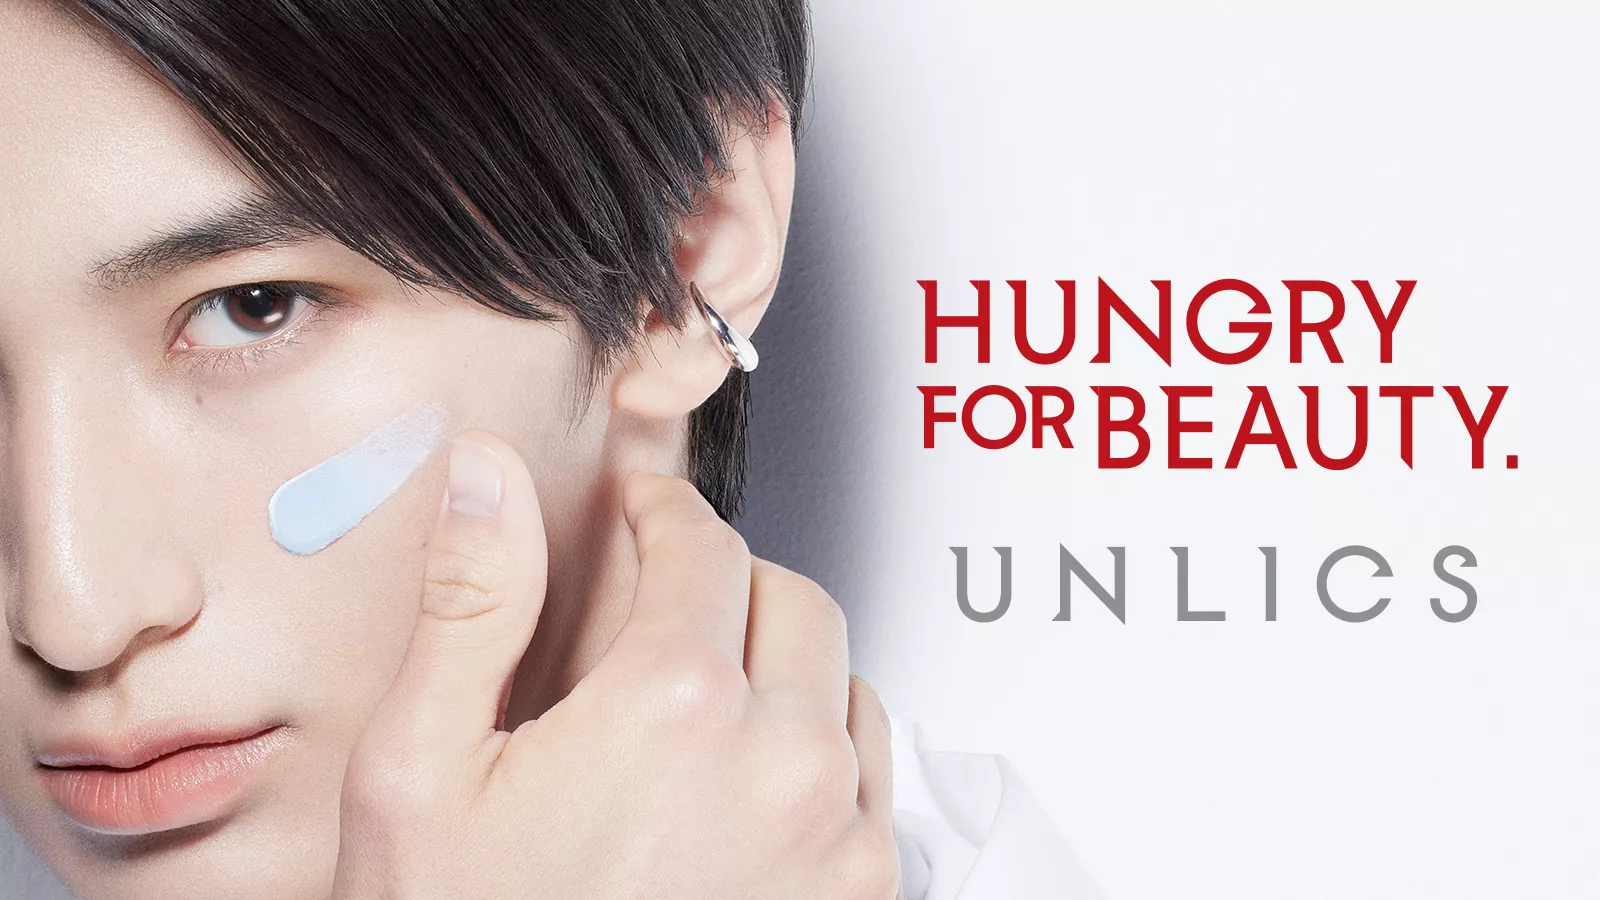 Target Adds 8 Inclusive Makeup Brands to New Beauty Program